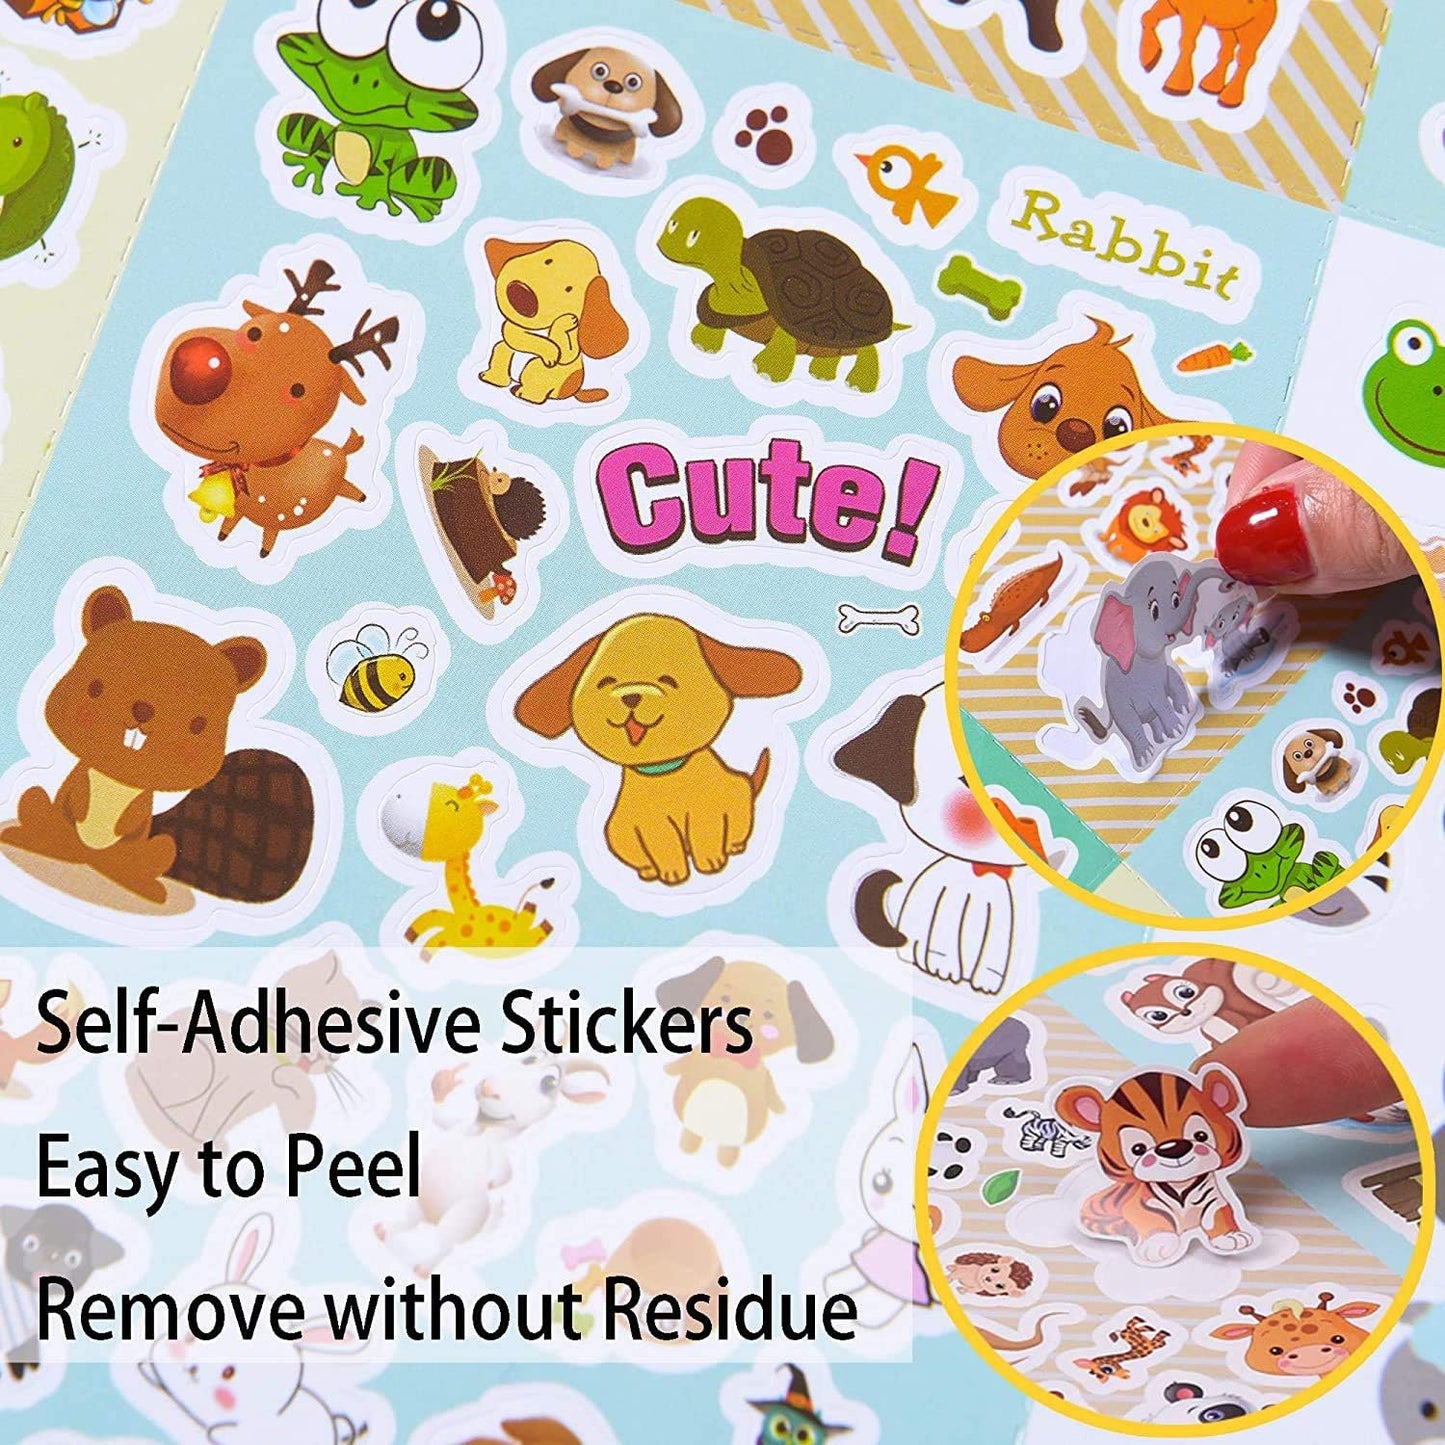 Variety sticker packs